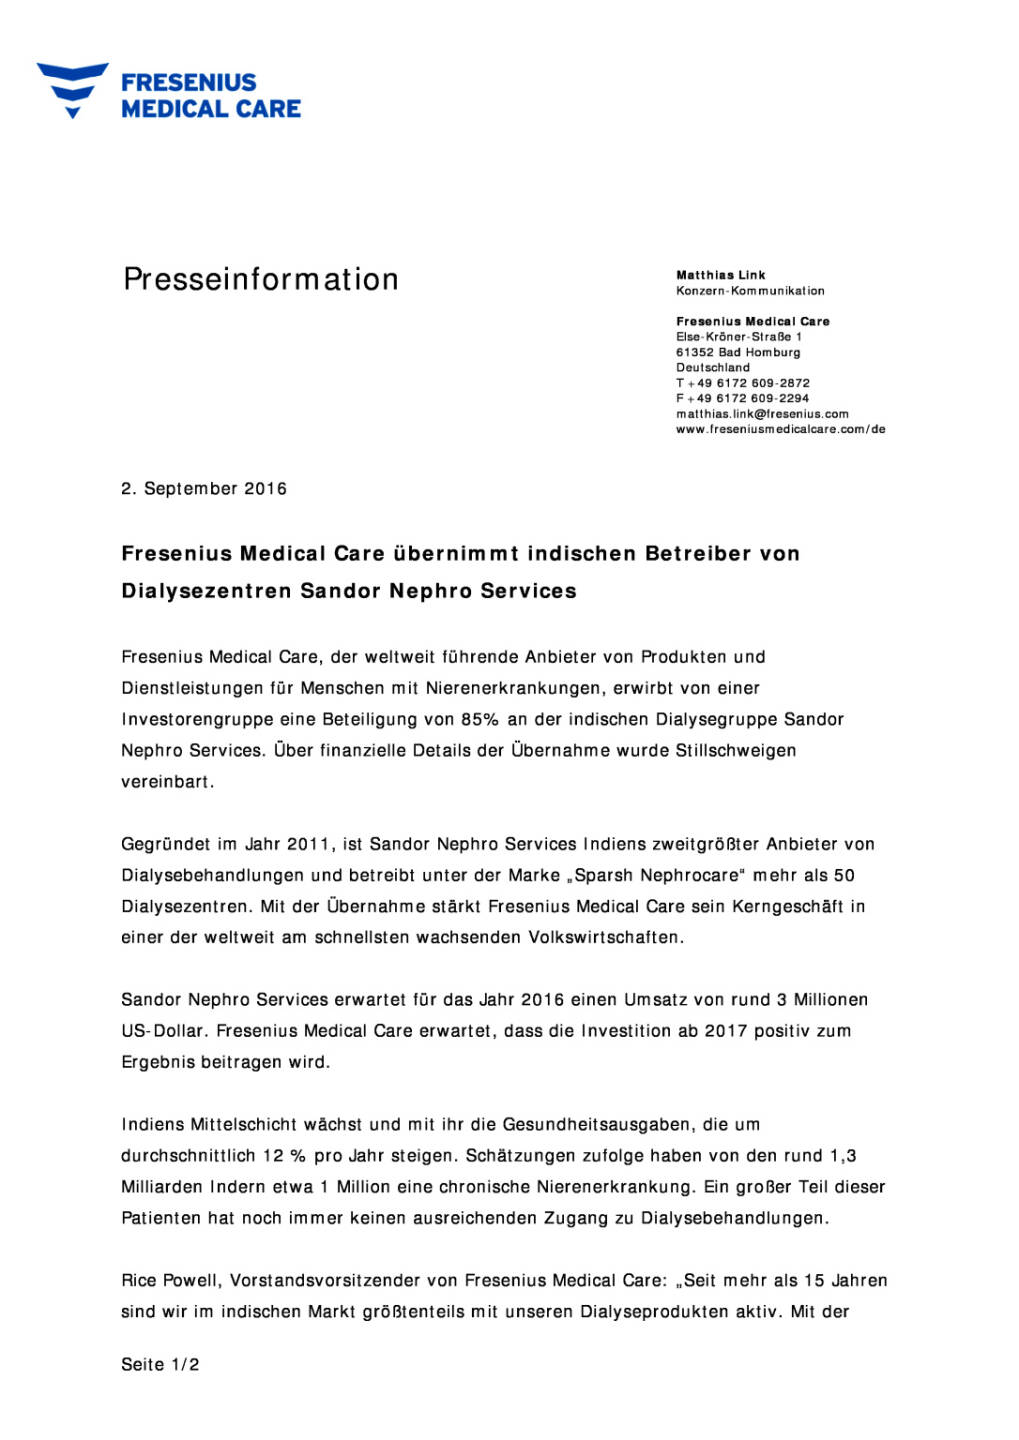 Fresenius Medical Care übernimmt Sandor Nephro Services, Seite 1/2, komplettes Dokument unter http://boerse-social.com/static/uploads/file_1710_fresenius_medical_care_ubernimmt_sandor_nephro_services.pdf